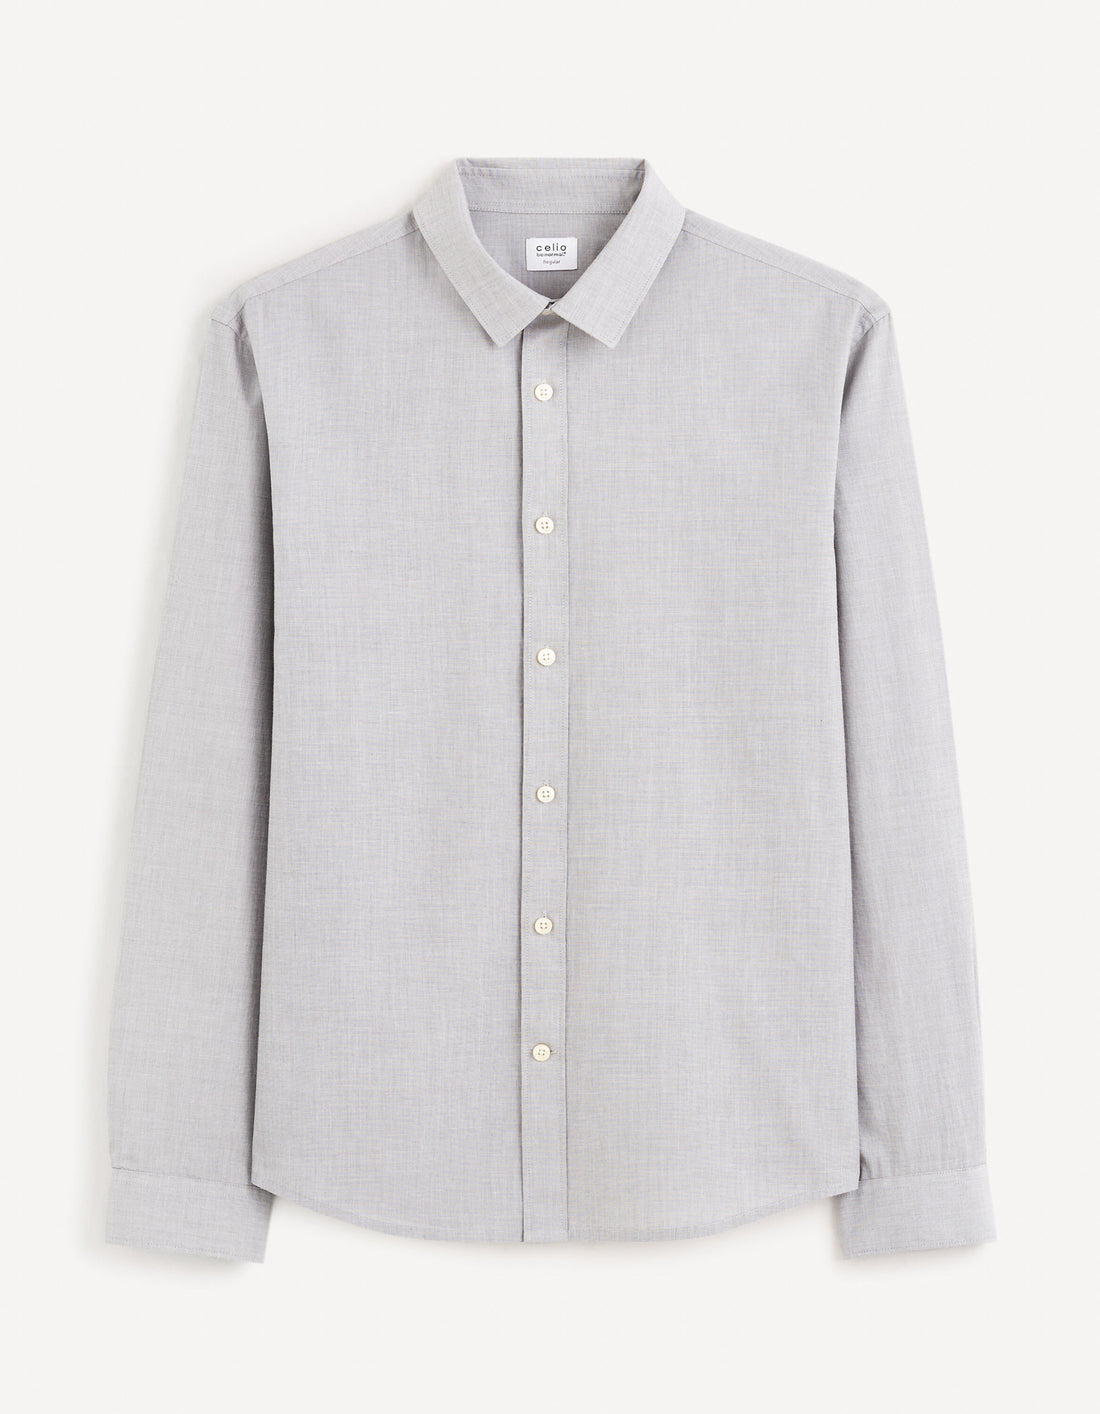 Regular Shirt 100% Cotton - Mottled Grey_FAFILE_ANTHRA GRAY_02